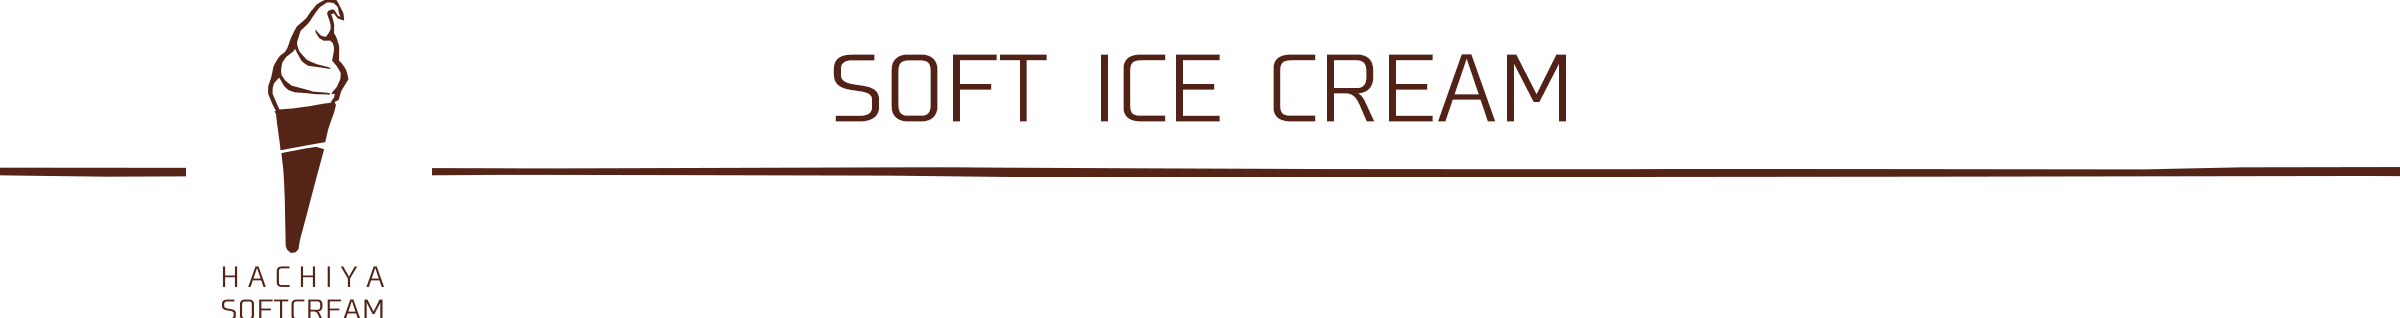 SOFT ICE CREAM